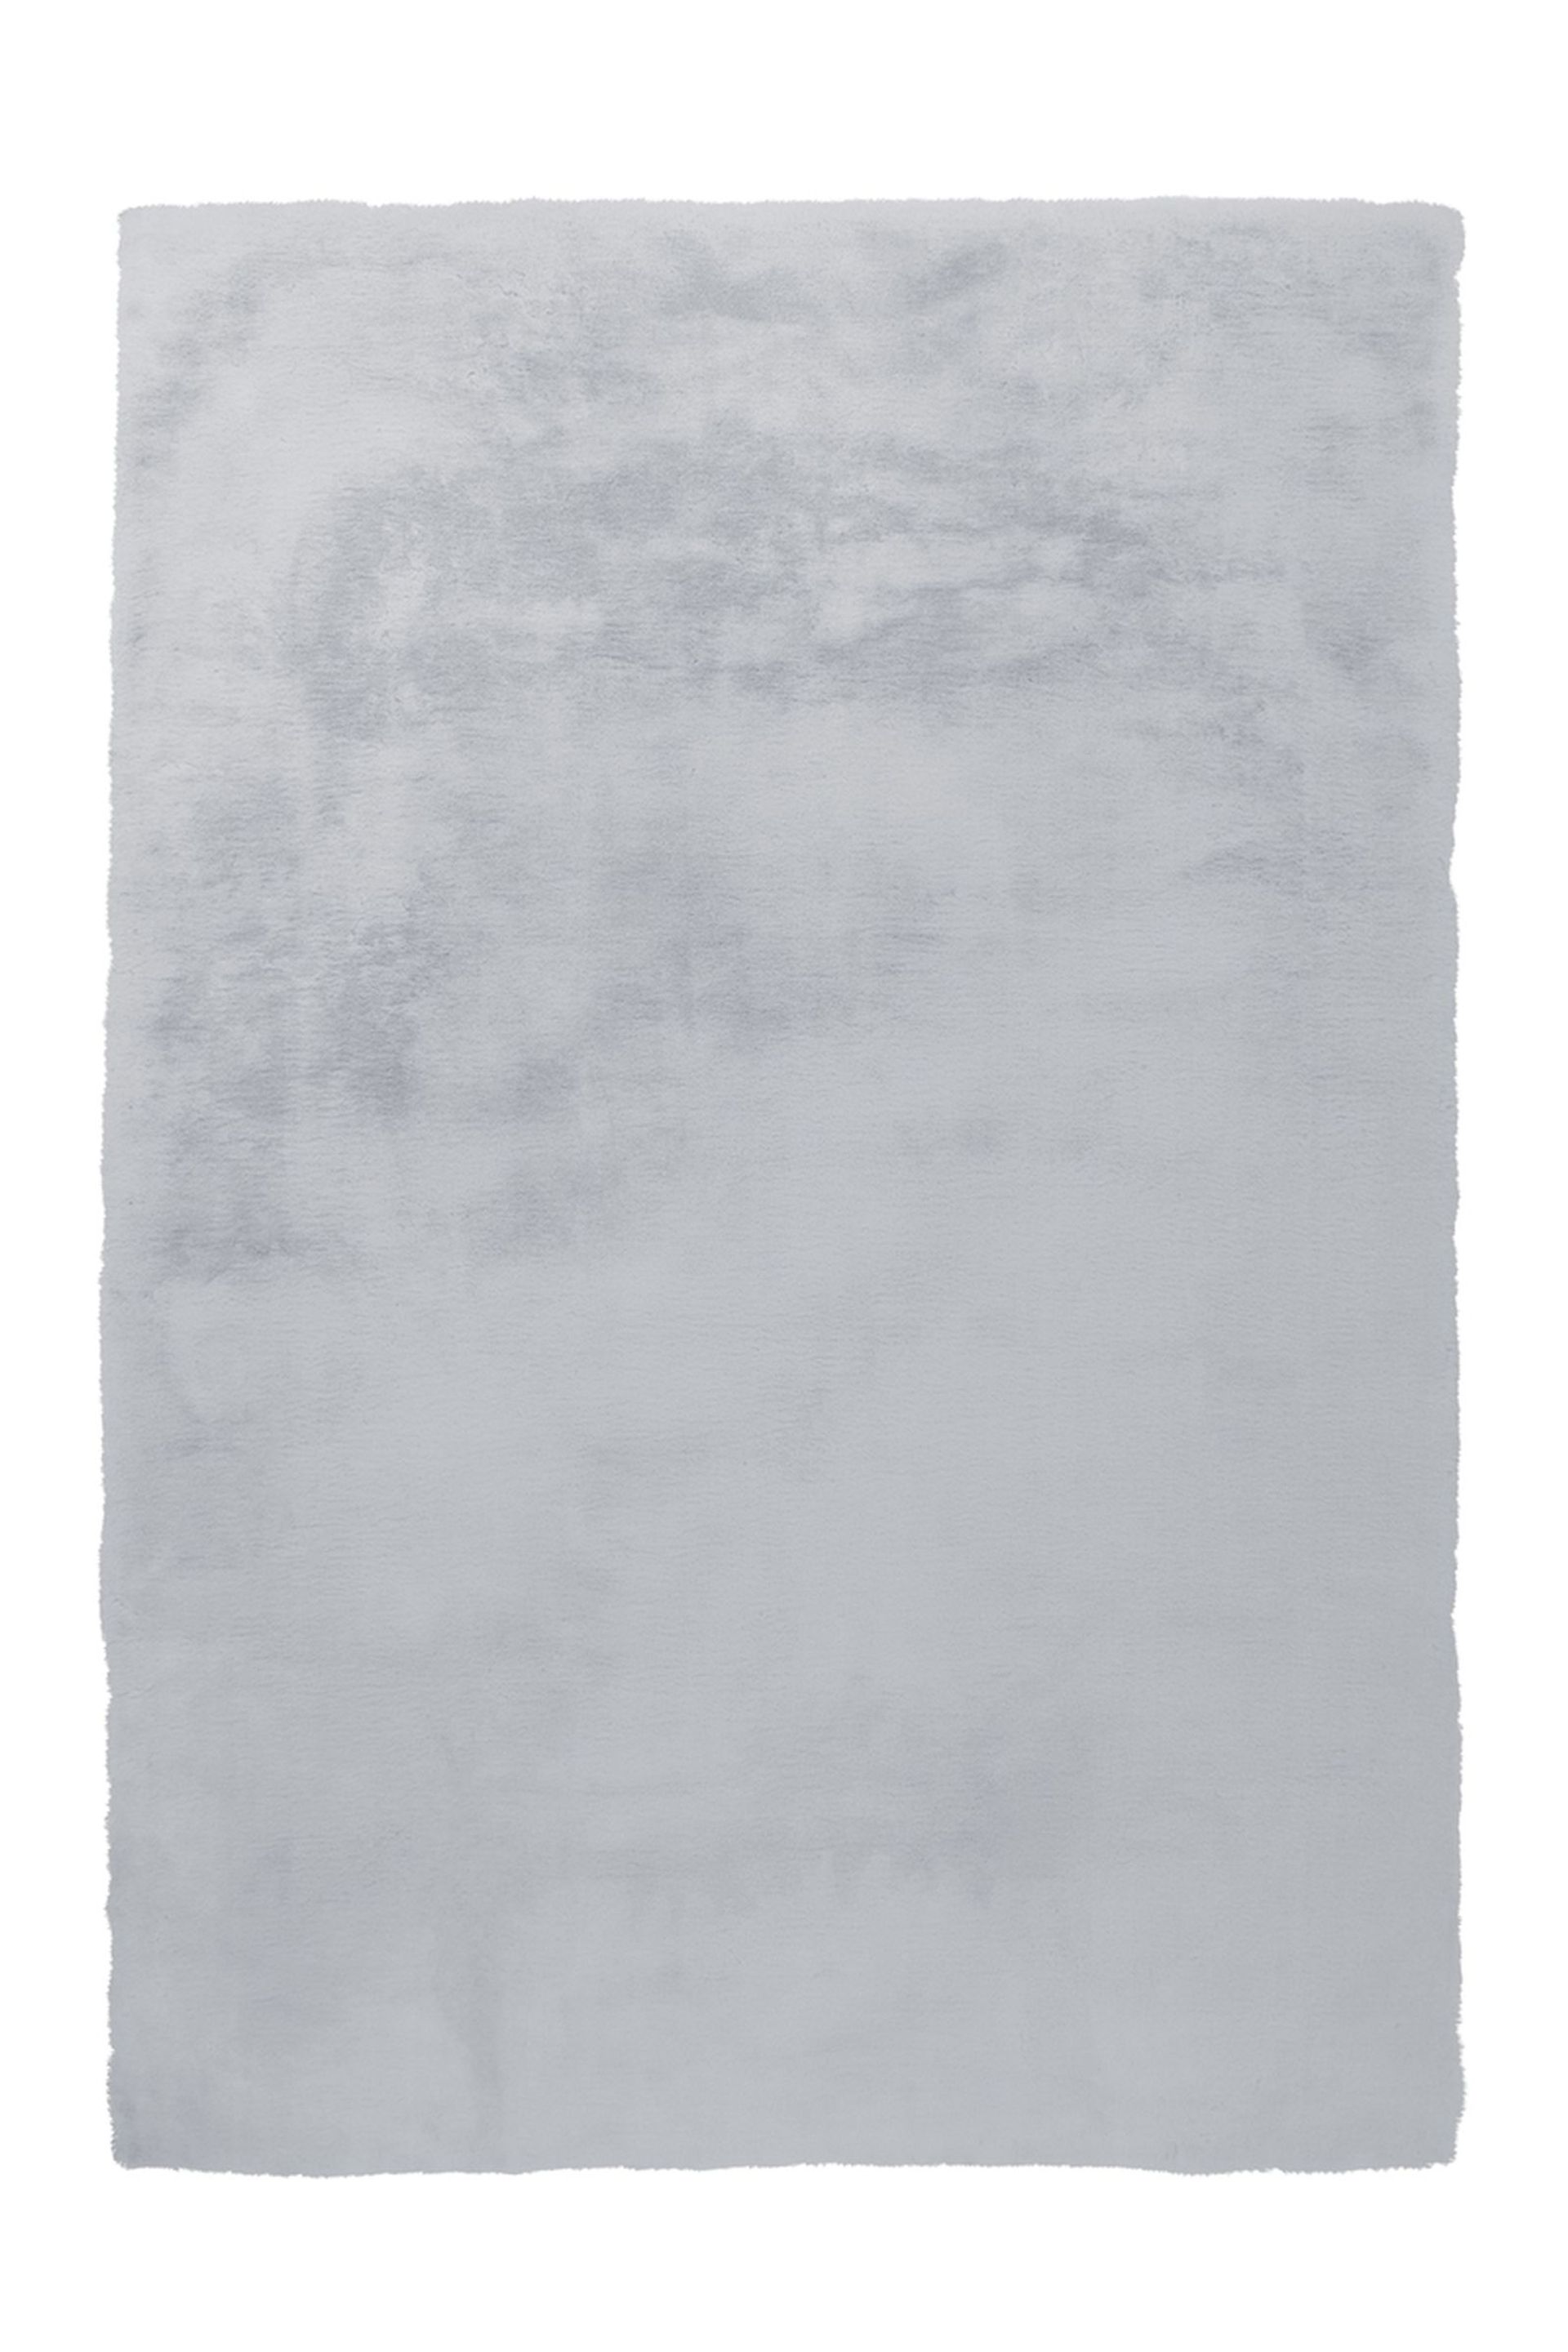 Teppich Rabbit 100 Grau / Blau  160 cm x 230 cm